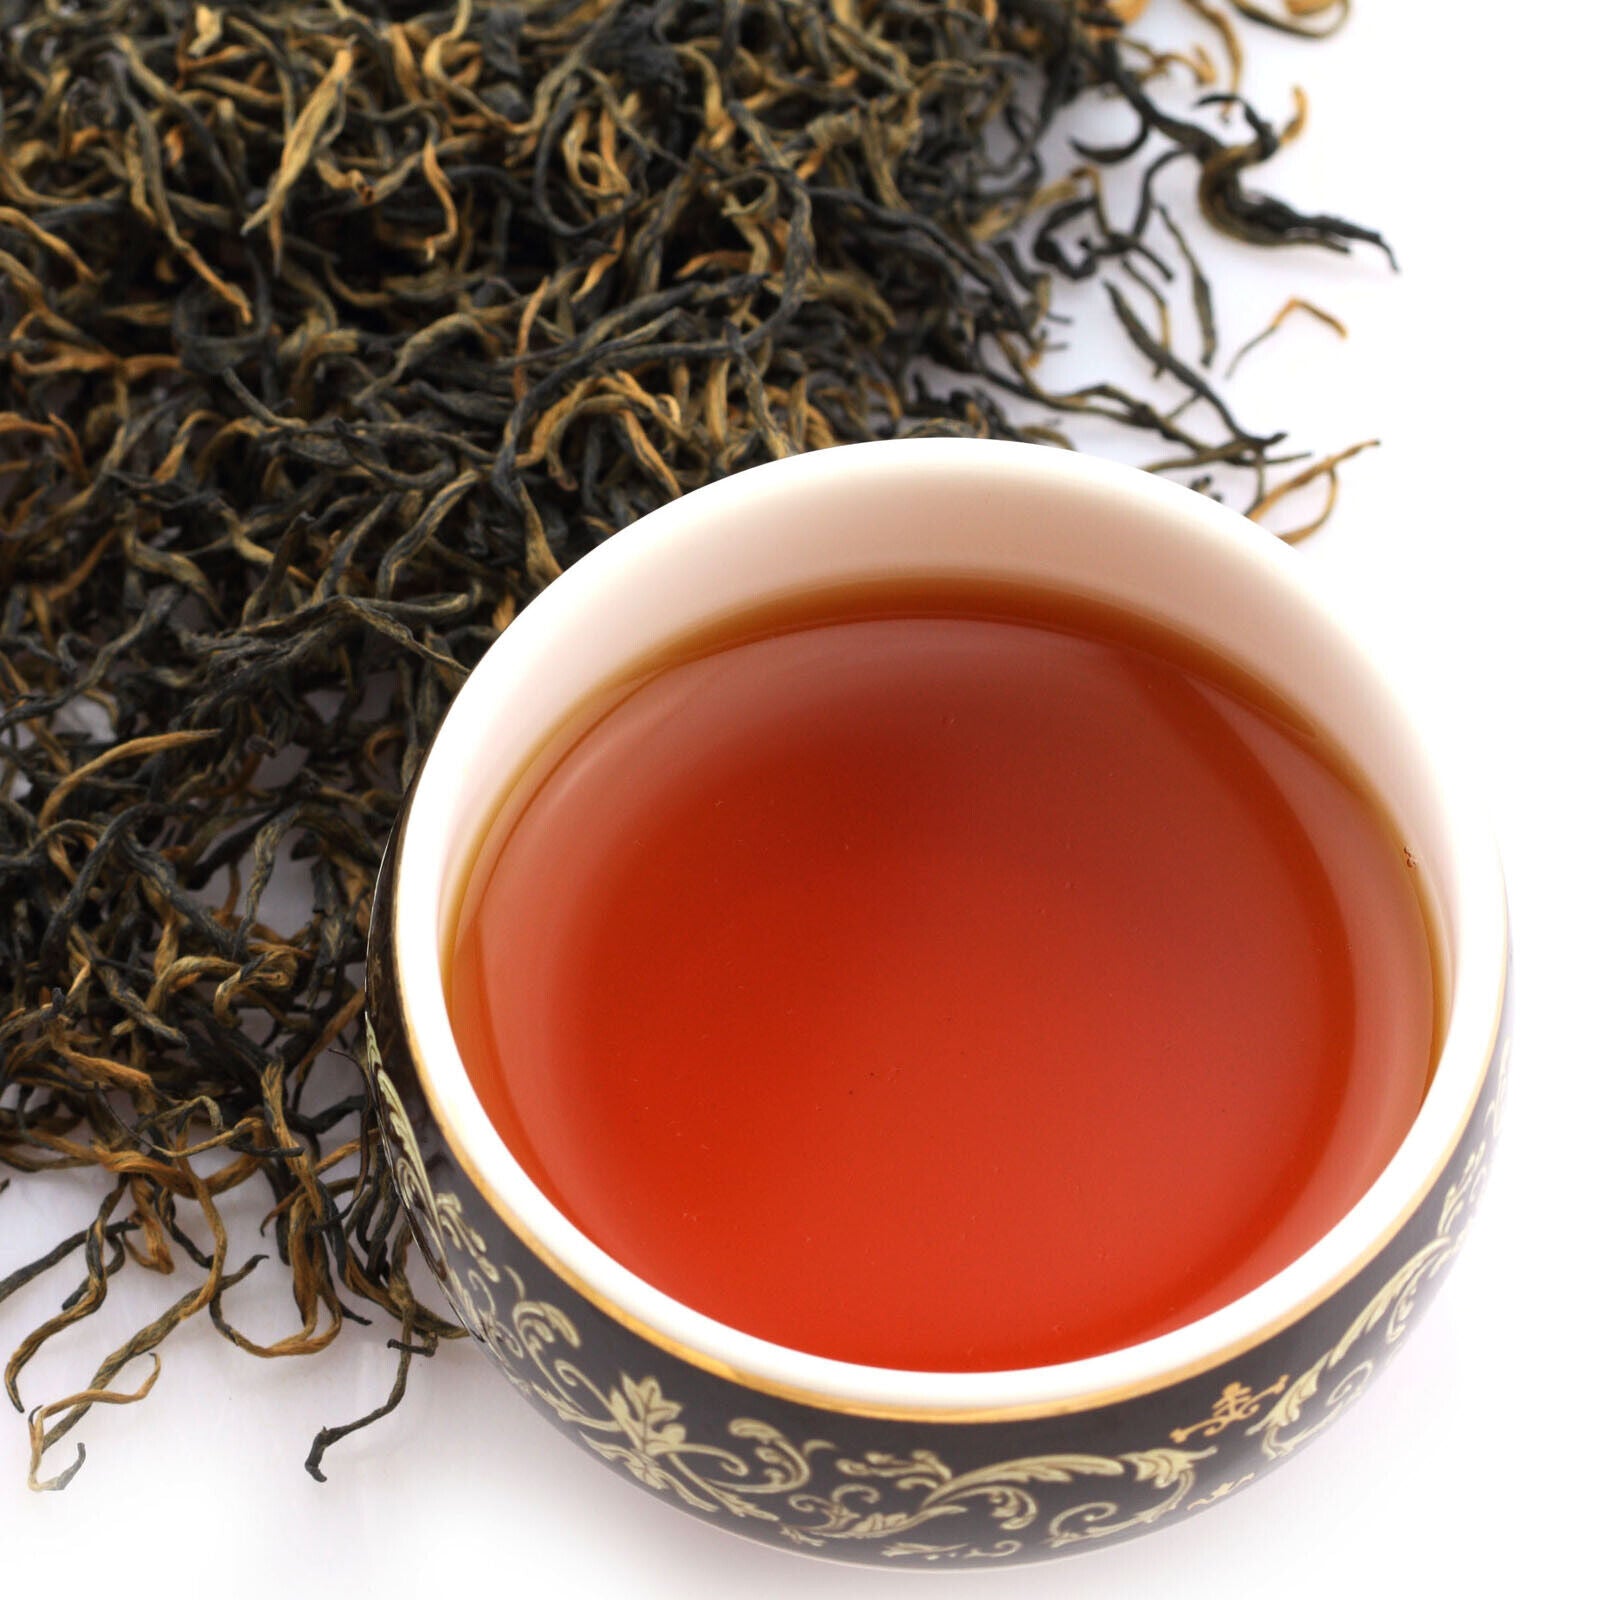 HelloYoung TeaHELLOYOUNG Premium Lapsang Souchong Black Tea Fujian Wuyi Golden Buds No Smoky